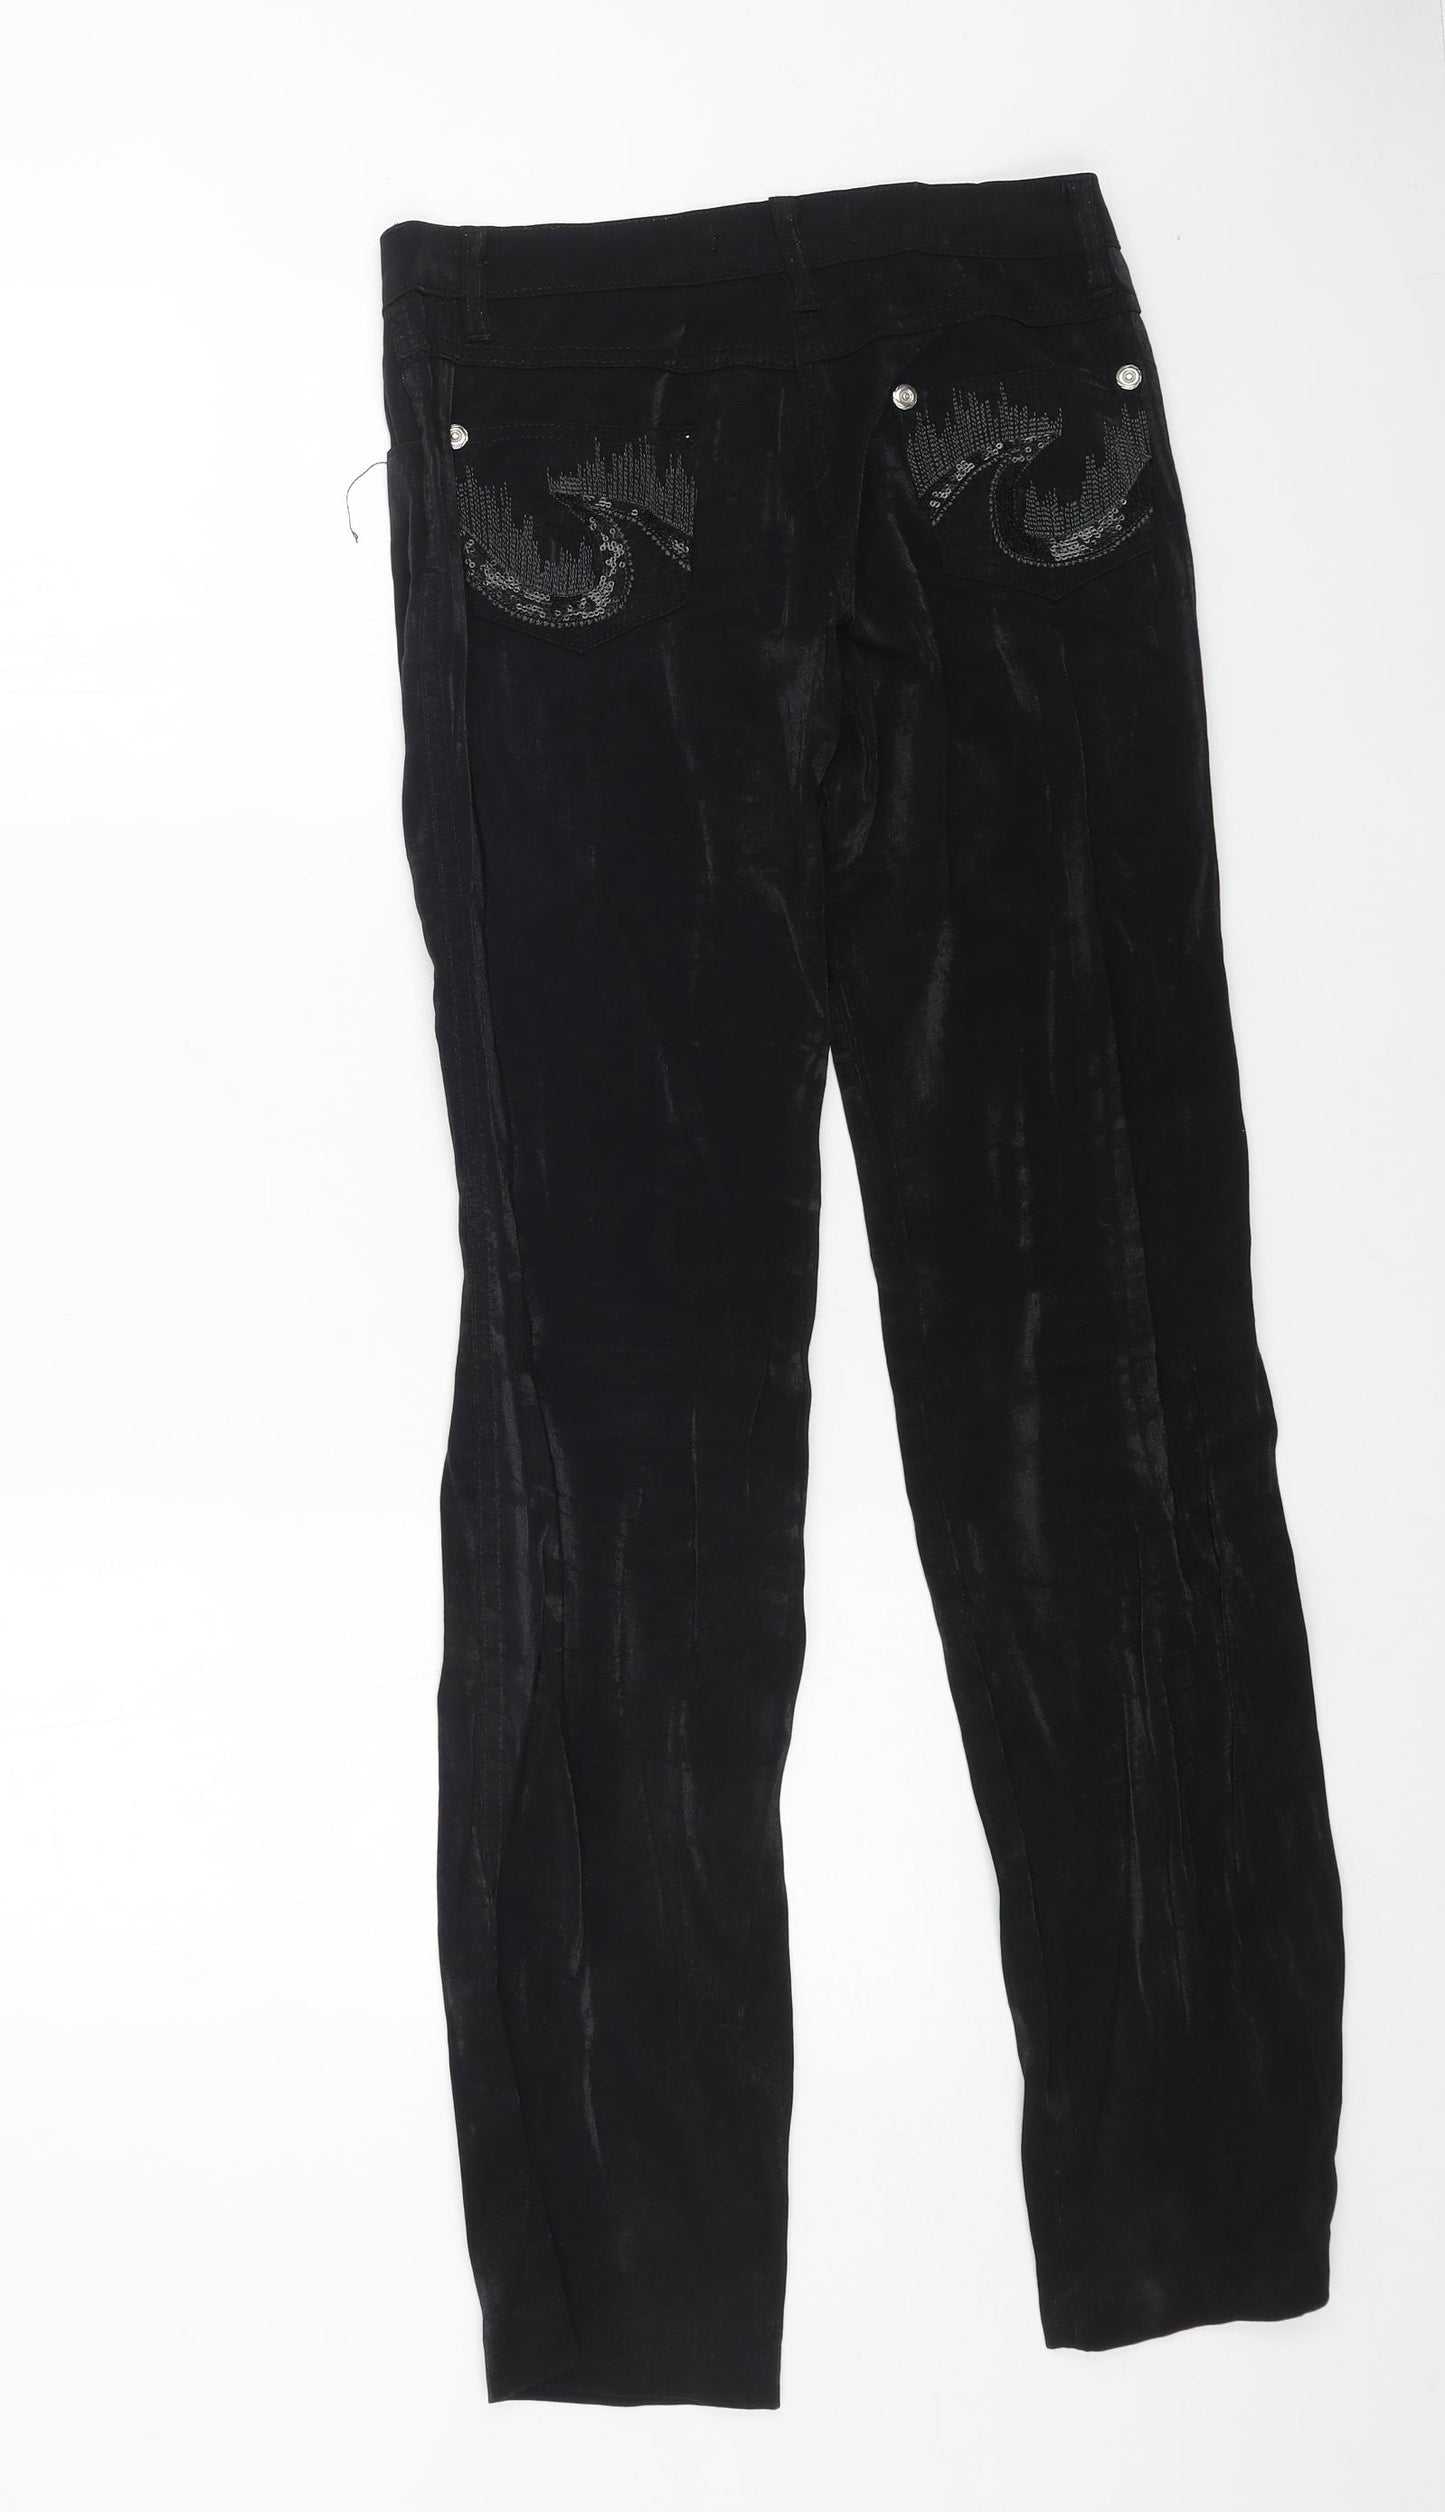 adoniti Womens Black Cotton Trousers Size 14 L32 in Regular Button